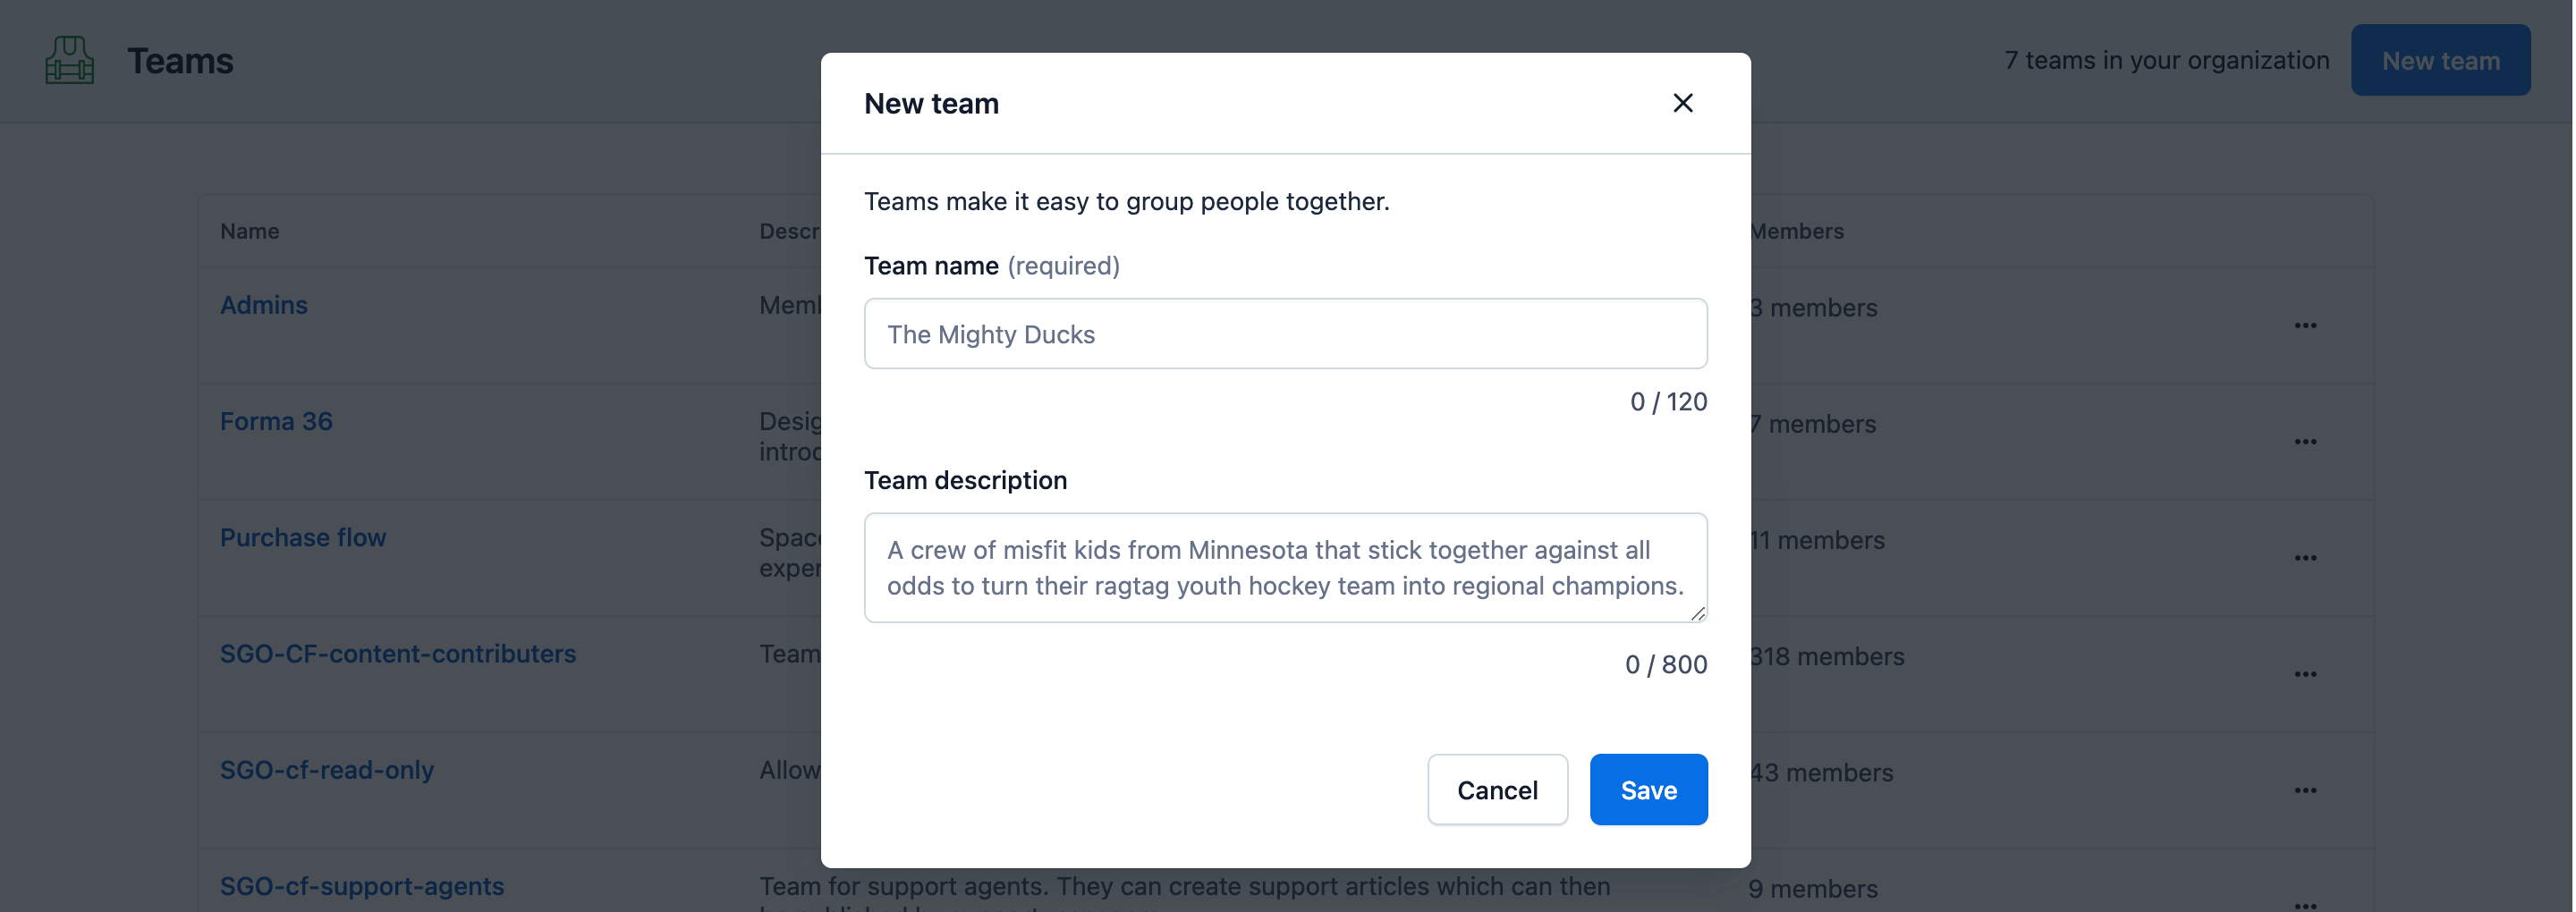 create a team - new team modal